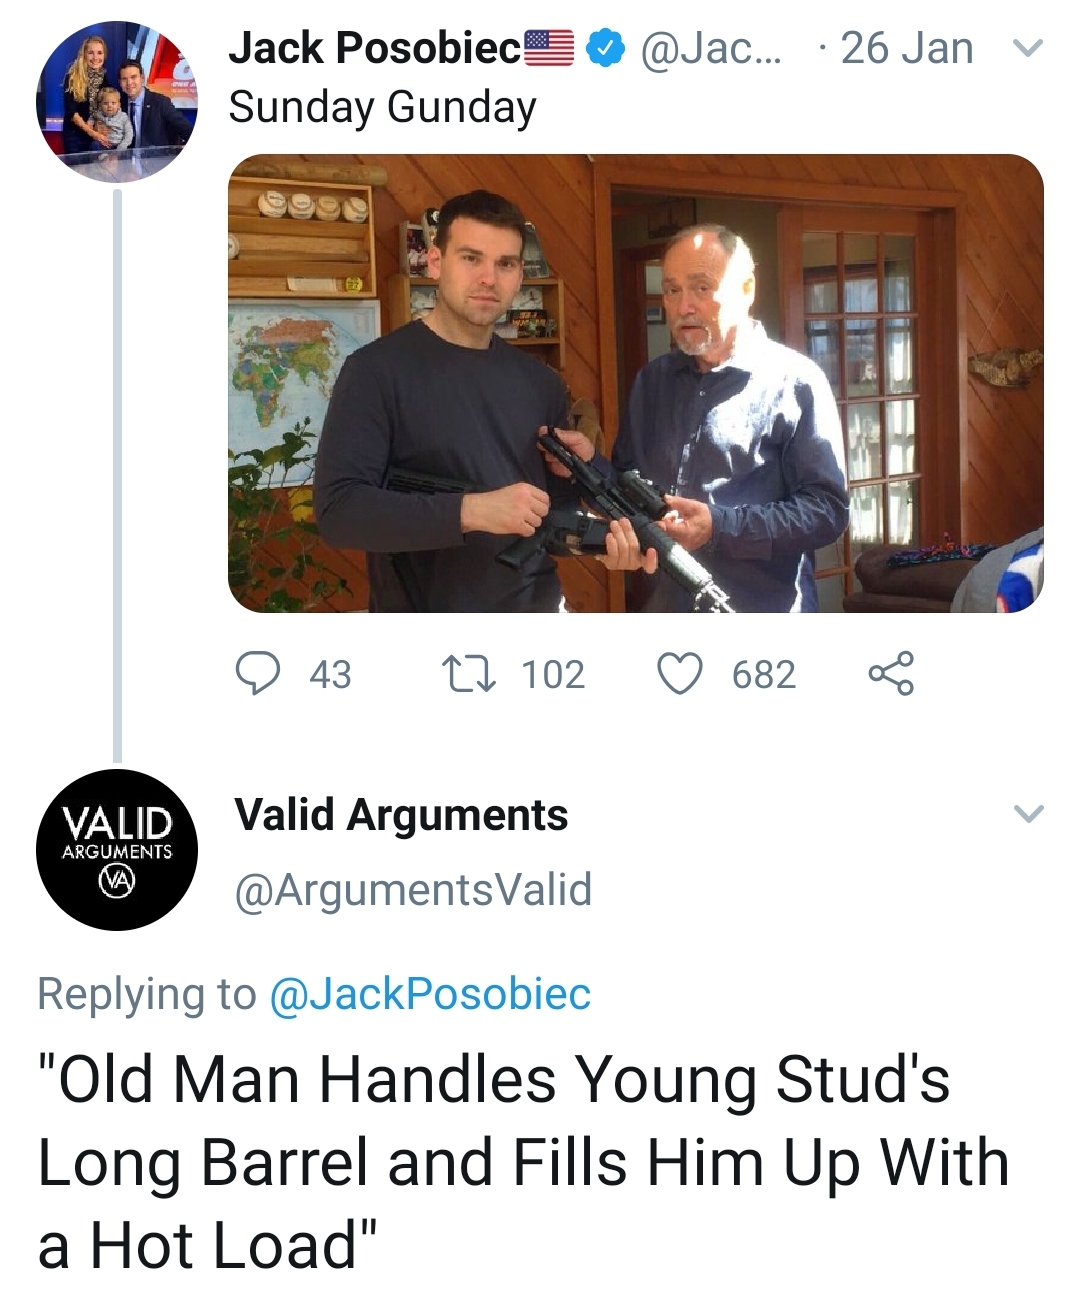 conversation - ... 26 Janv Jack Posobiec Sunday Gunday 43 27 102 682 Valid Arguments Valid Arguments "Old Man Handles Young Stud's Long Barrel and Fills Him Up With a Hot Load"